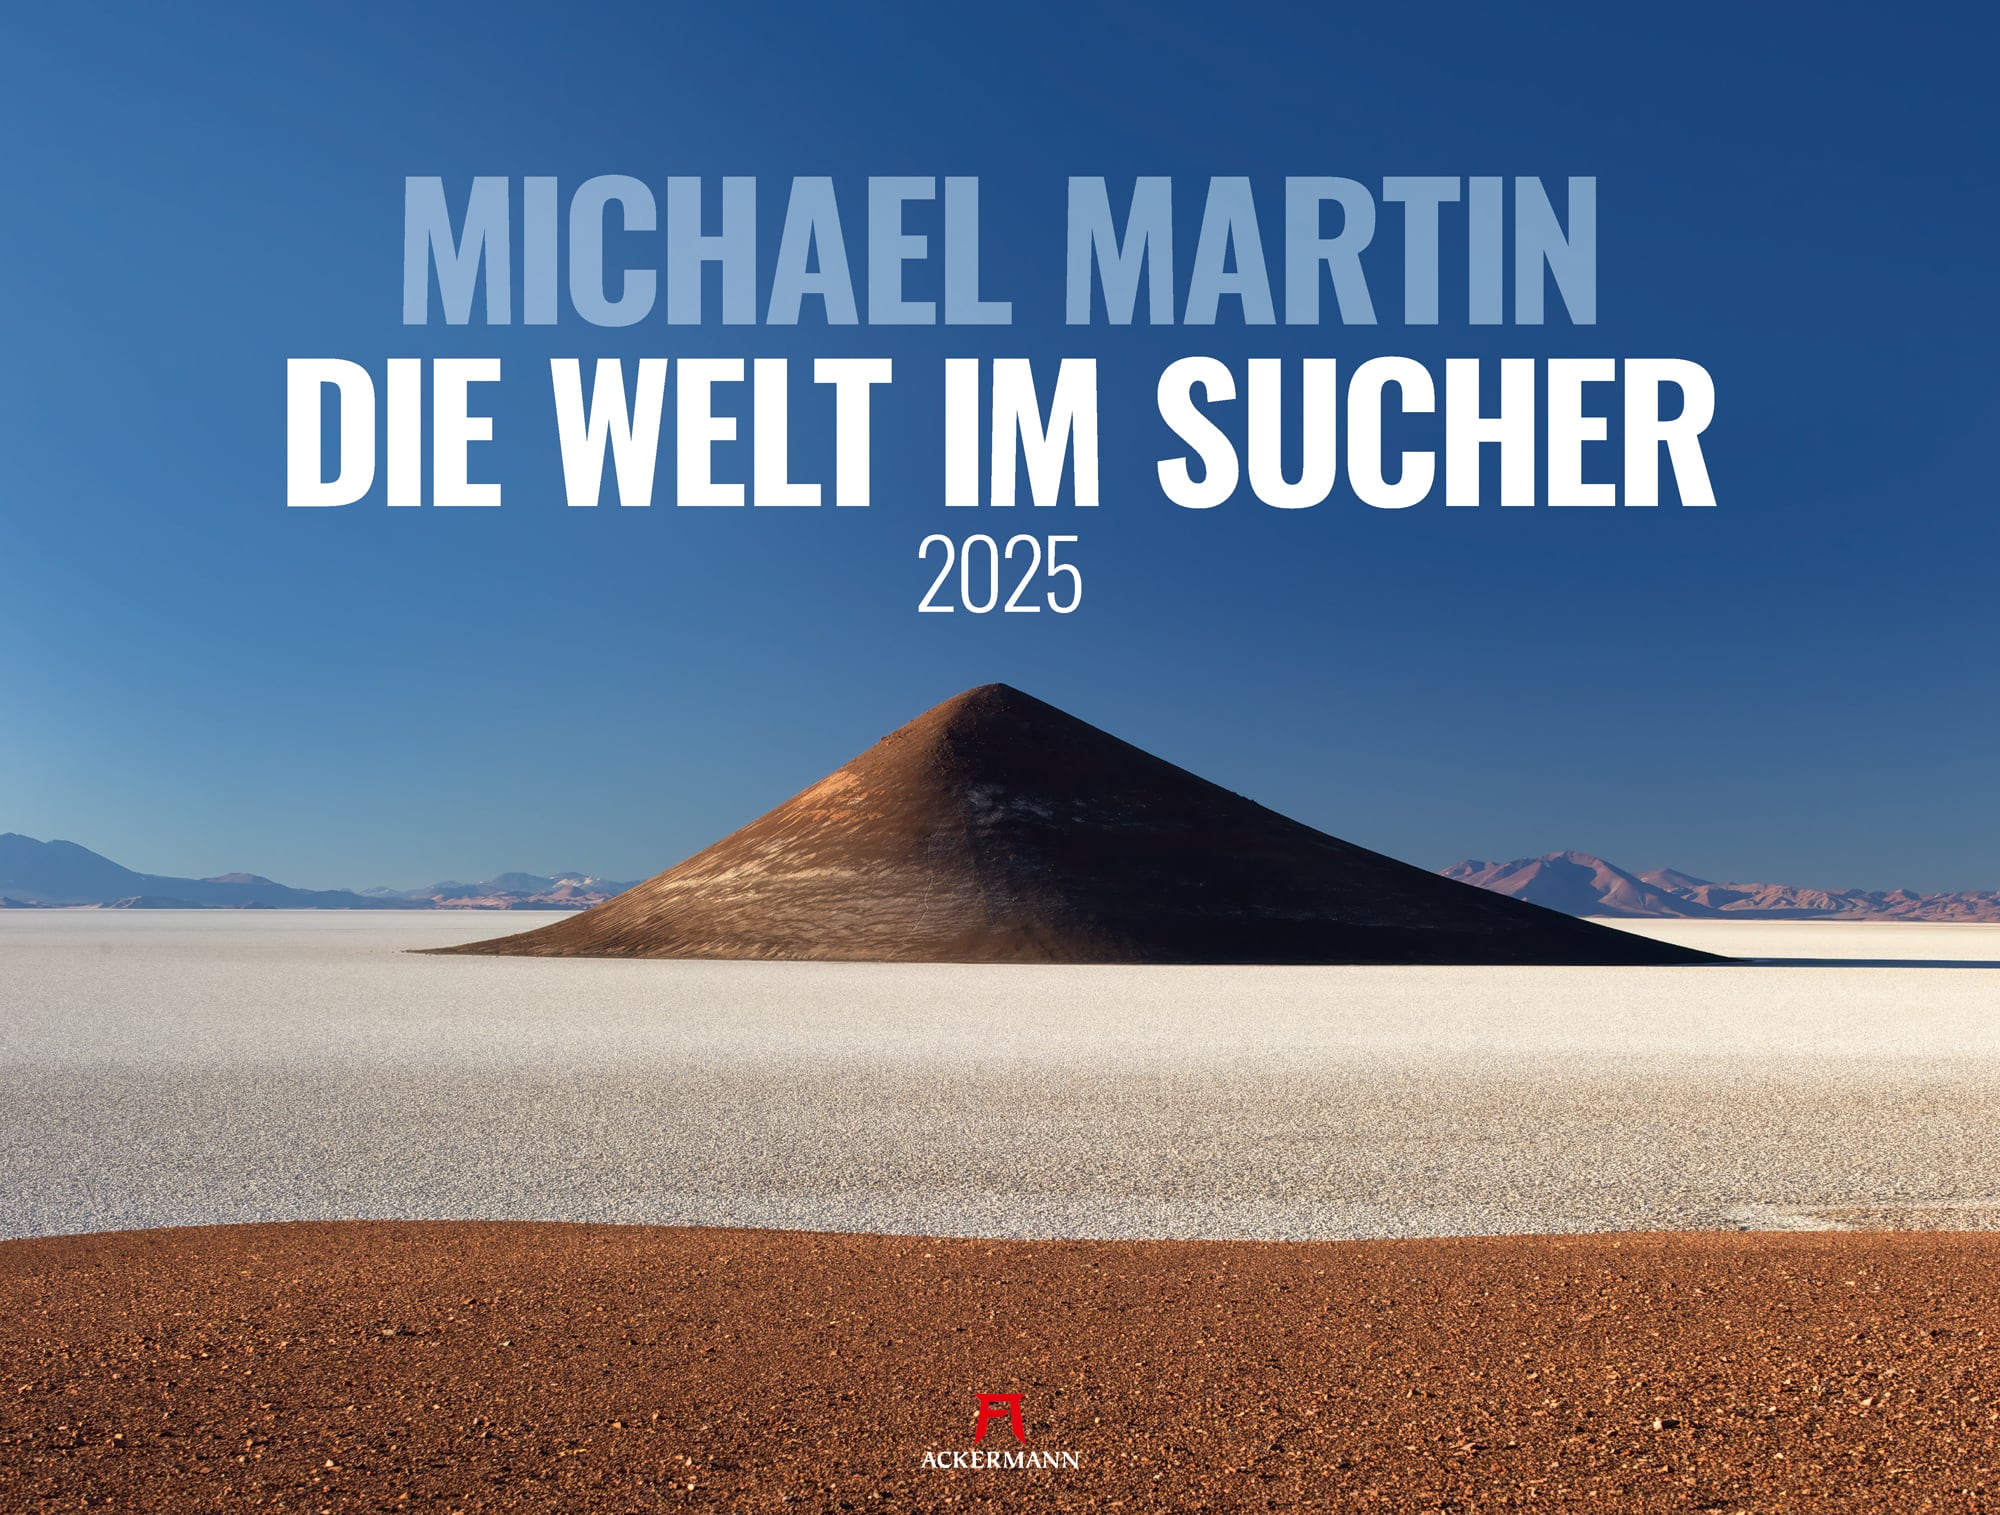 Ackermann Calendar World through the viewfinder - Michael Martin 2025 - Cover Page